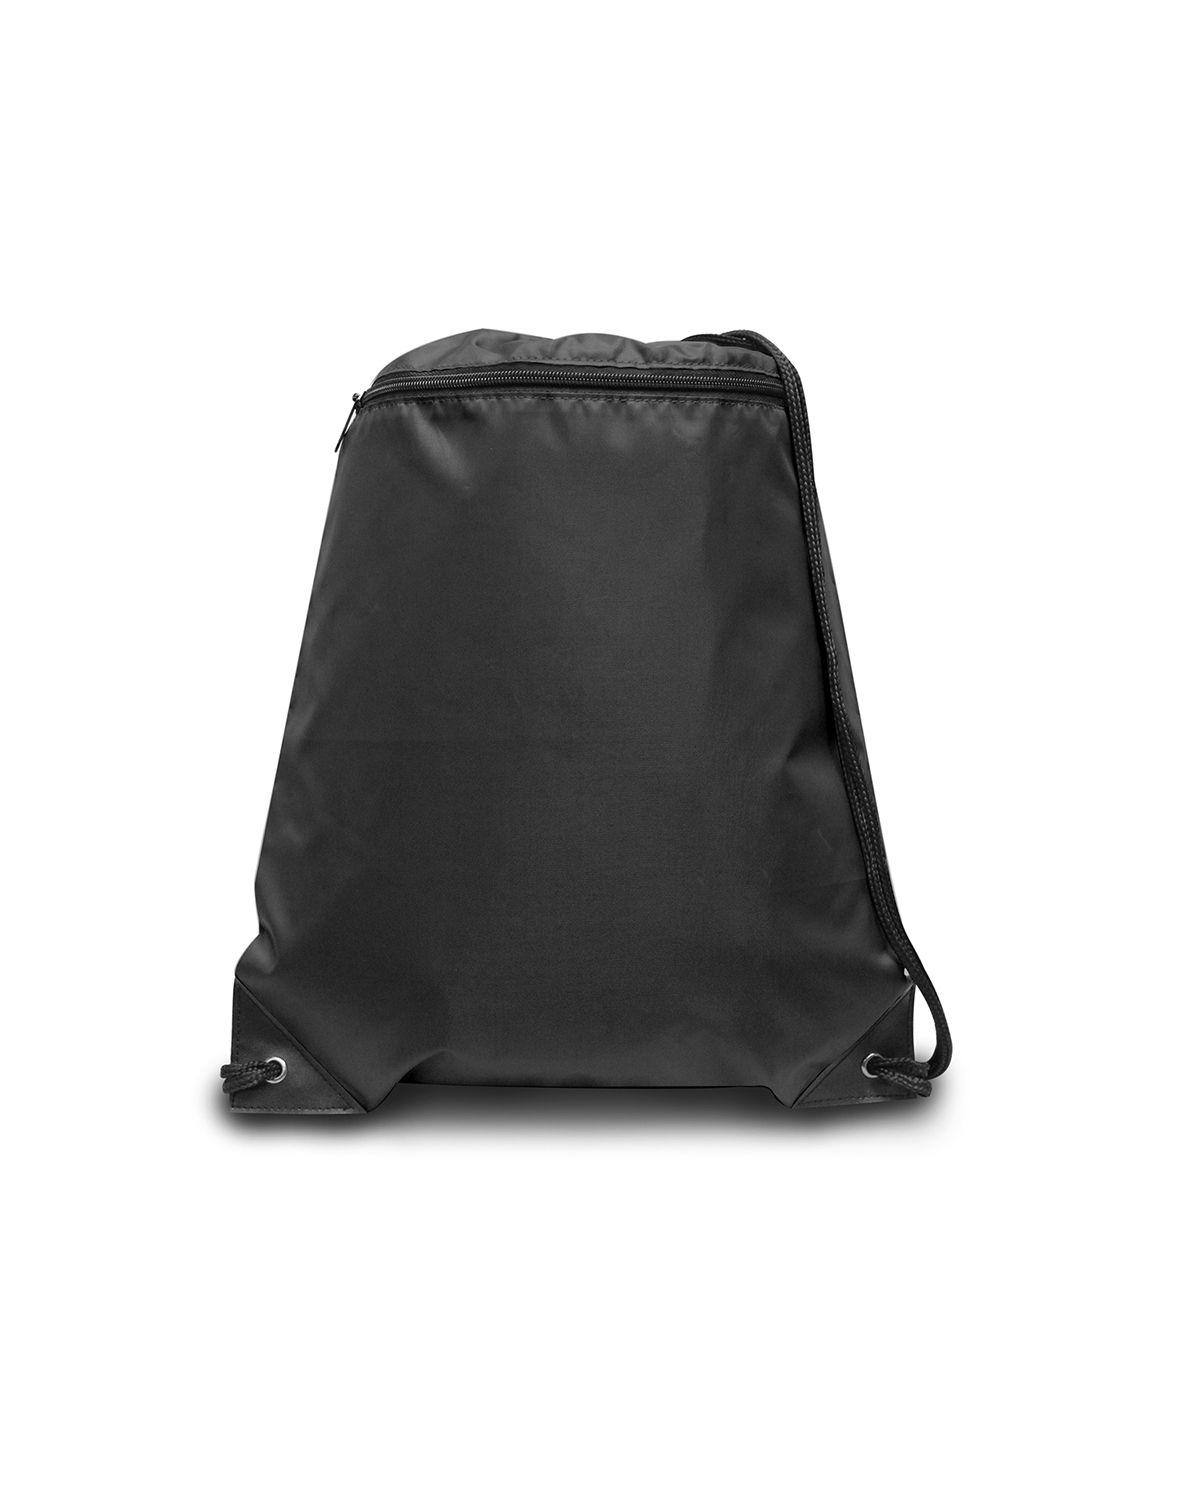 Liberty Bags 8888 Zipper Drawstring Backpack - Shirtmax